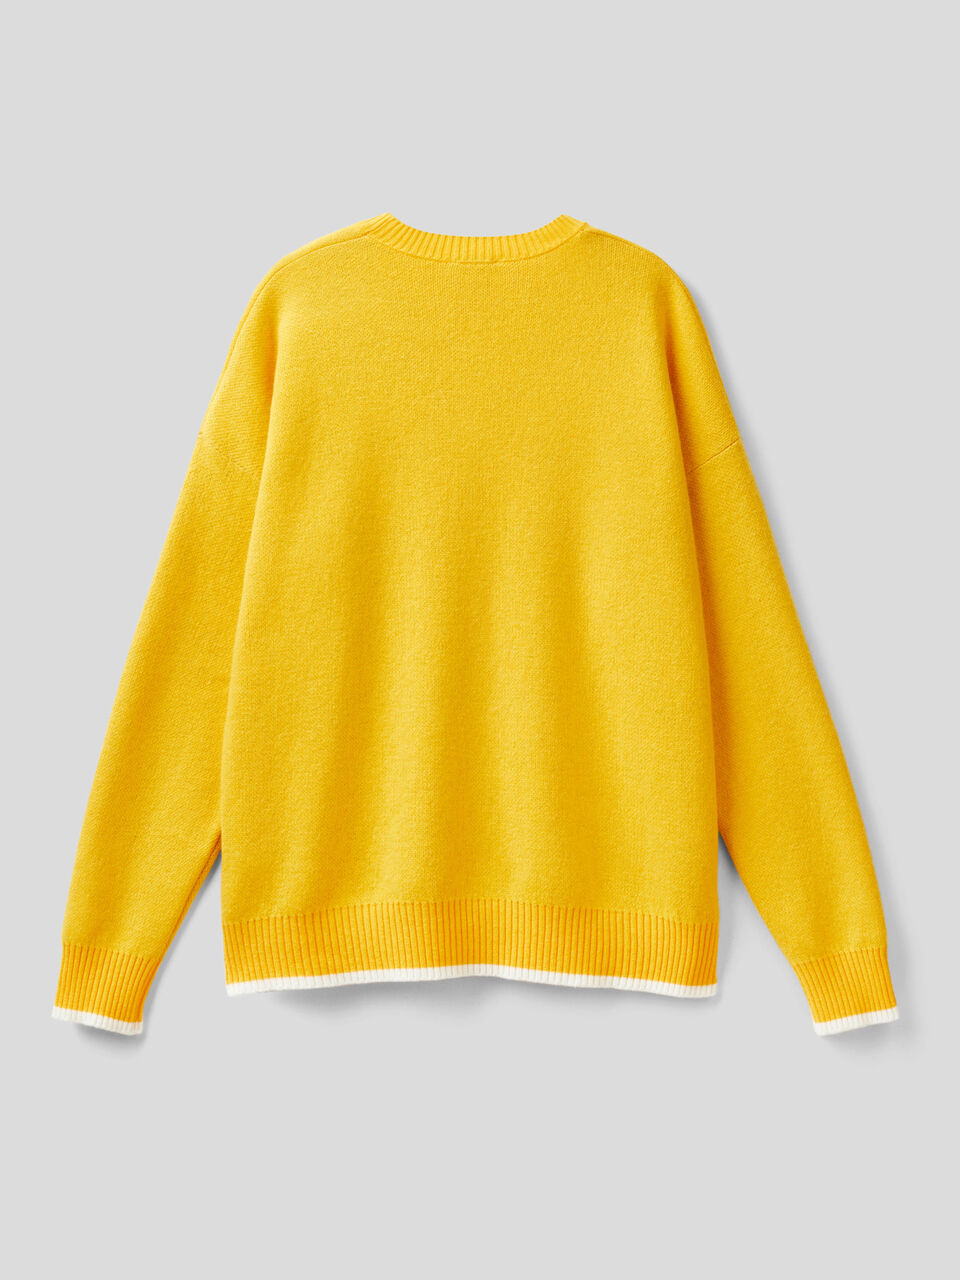 BenettonxPantone™ yellow sweater - Yellow